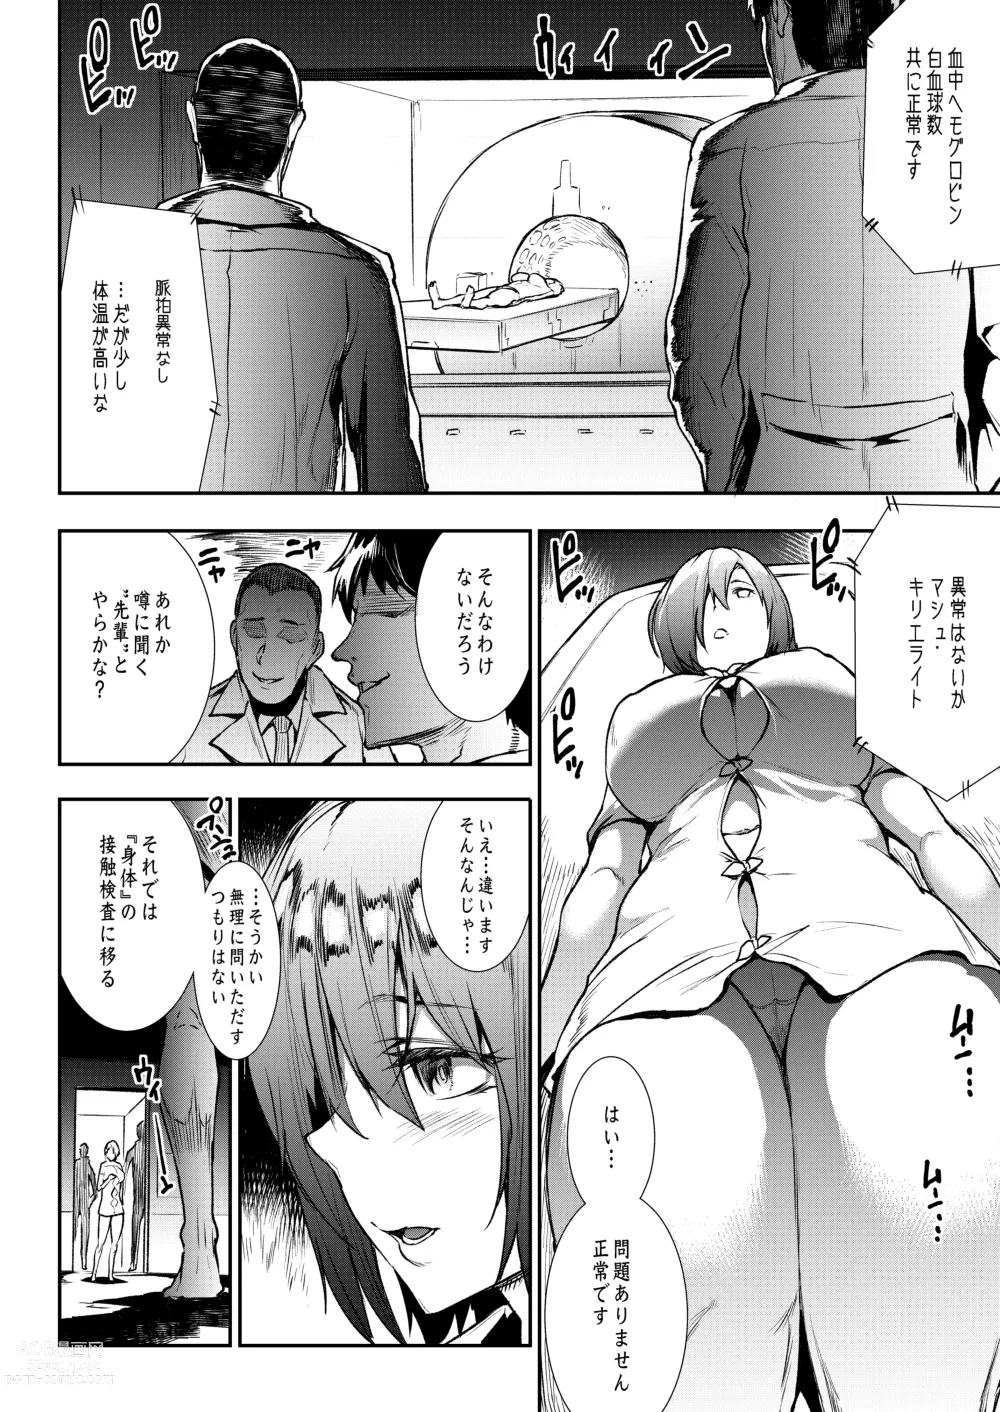 Page 5 of doujinshi Mash, Rinkan.